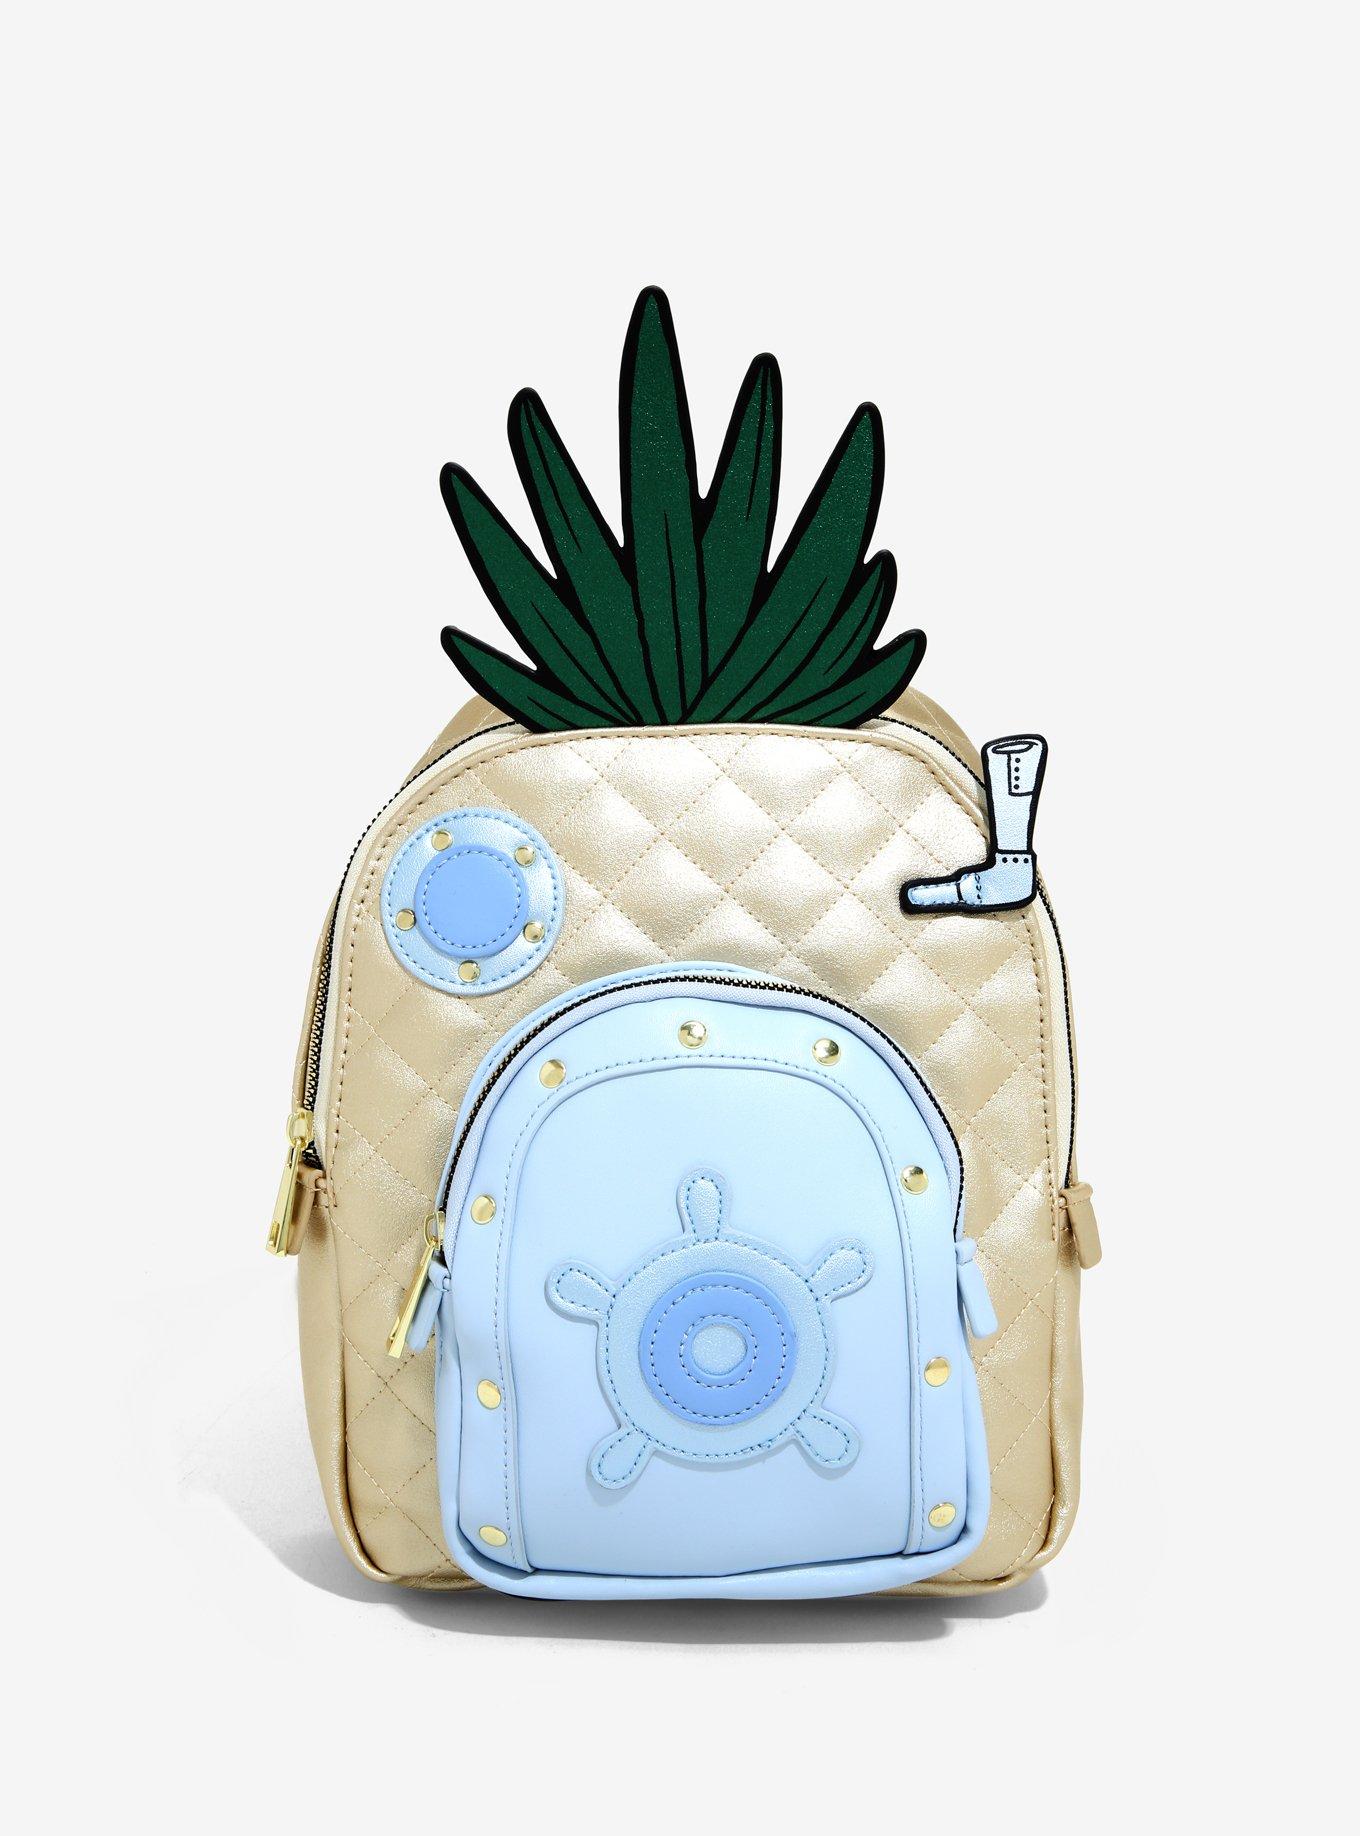 SpongeBob SquarePants Figural Pineapple Mini Backpack - BoxLunch Exclusive, , hi-res